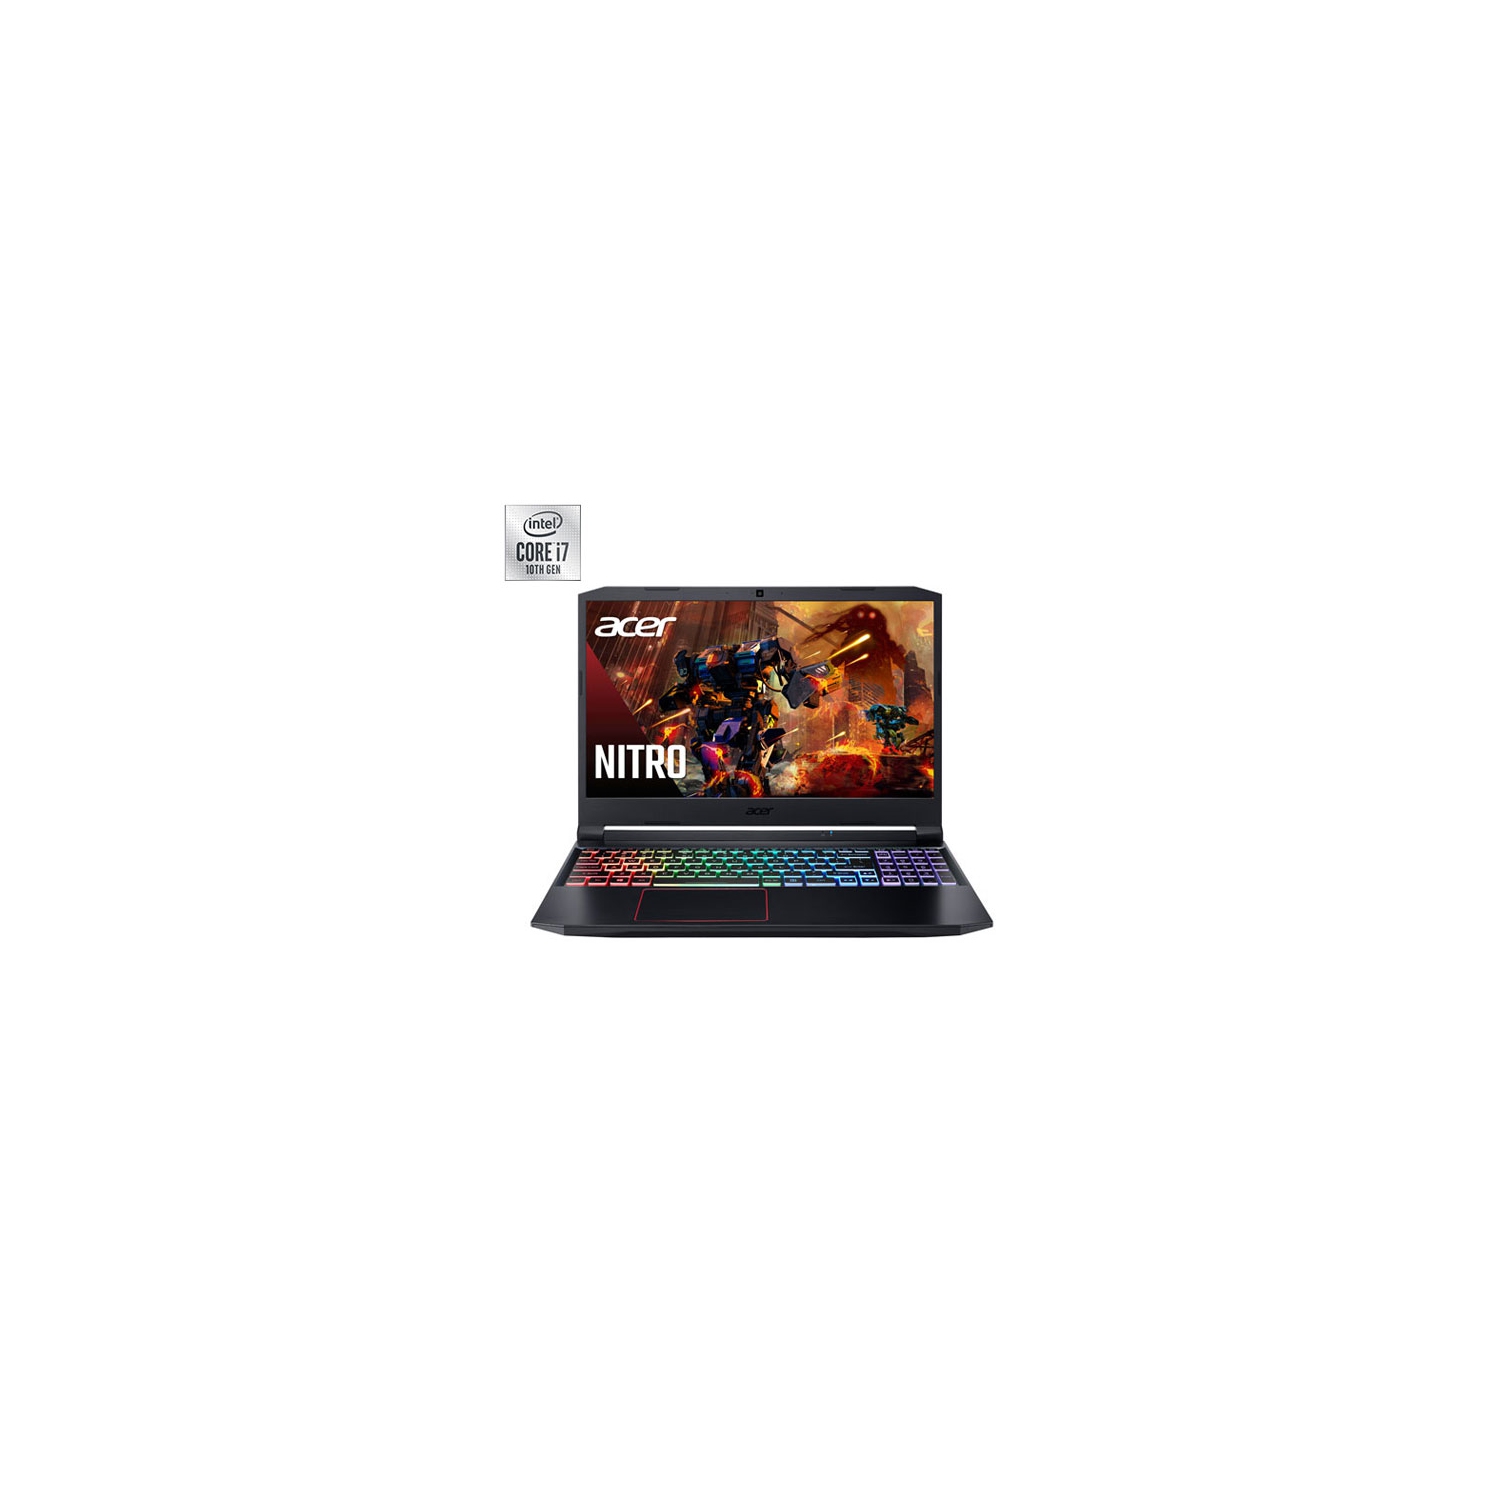 Refurbished (Good) - Acer Nitro 5 15.6" Gaming Laptop - Black (Intel Core i7-10750H/512GB SSD/16GB RAM/RTX 3060)